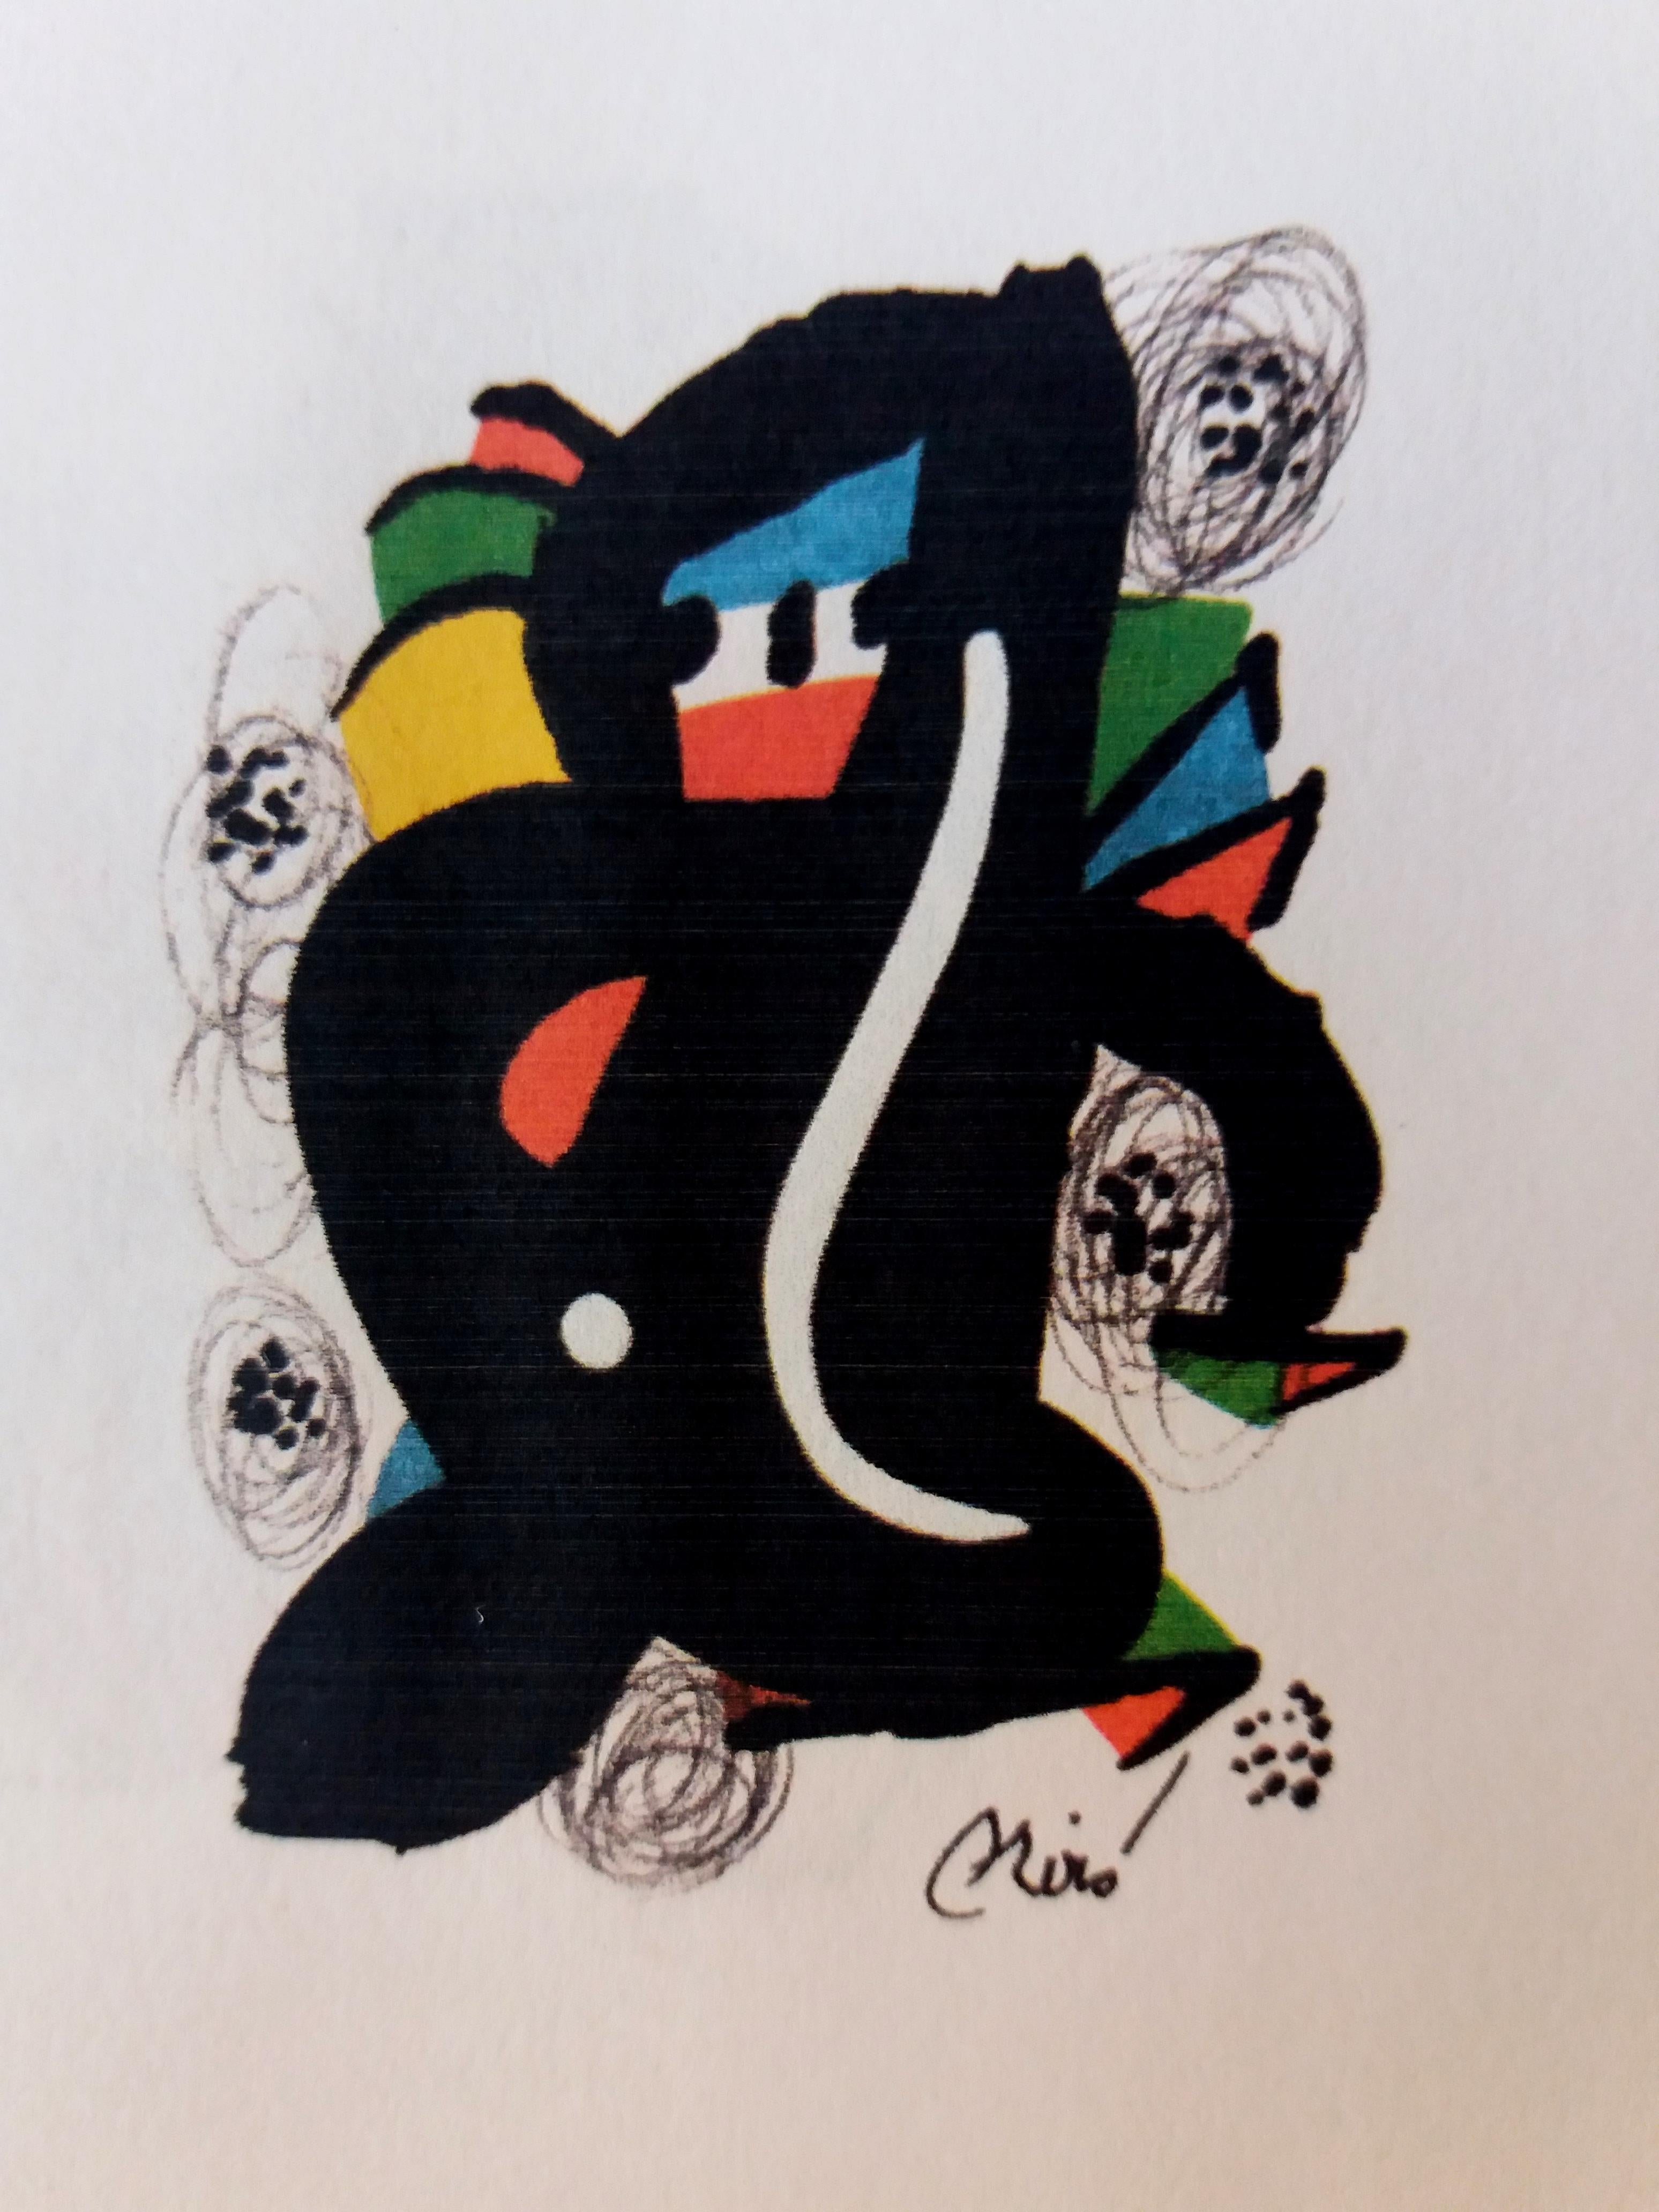 Abstract Print Joan Miró - Miro    La mélodie acide. peinture lithographique originale. 